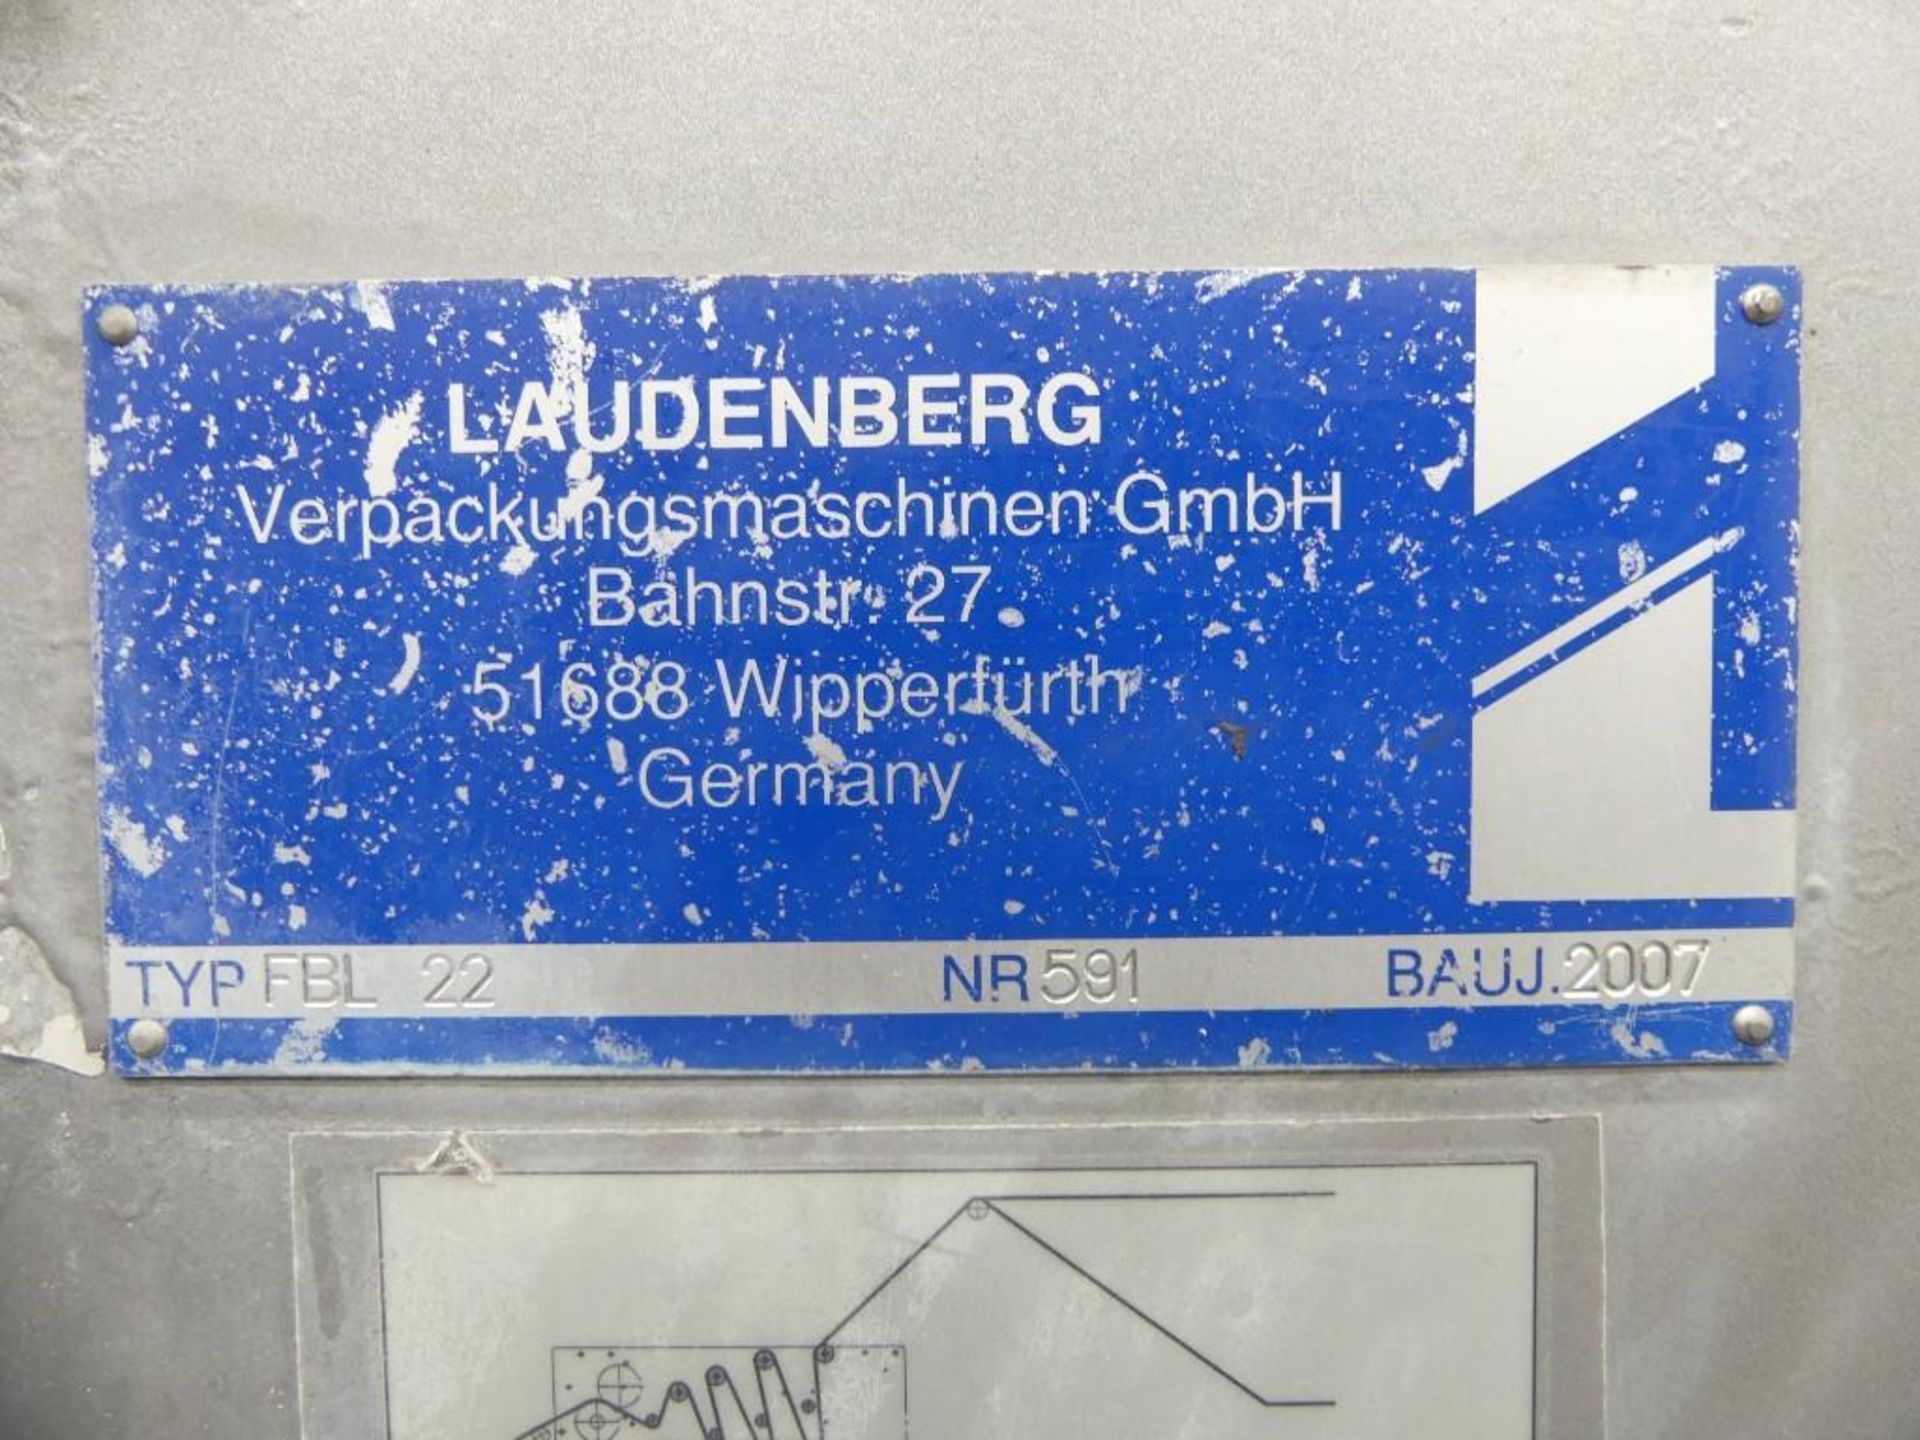 Laudenberg FBL 22 HFFS Pouch Machine with Zipper - Image 33 of 33